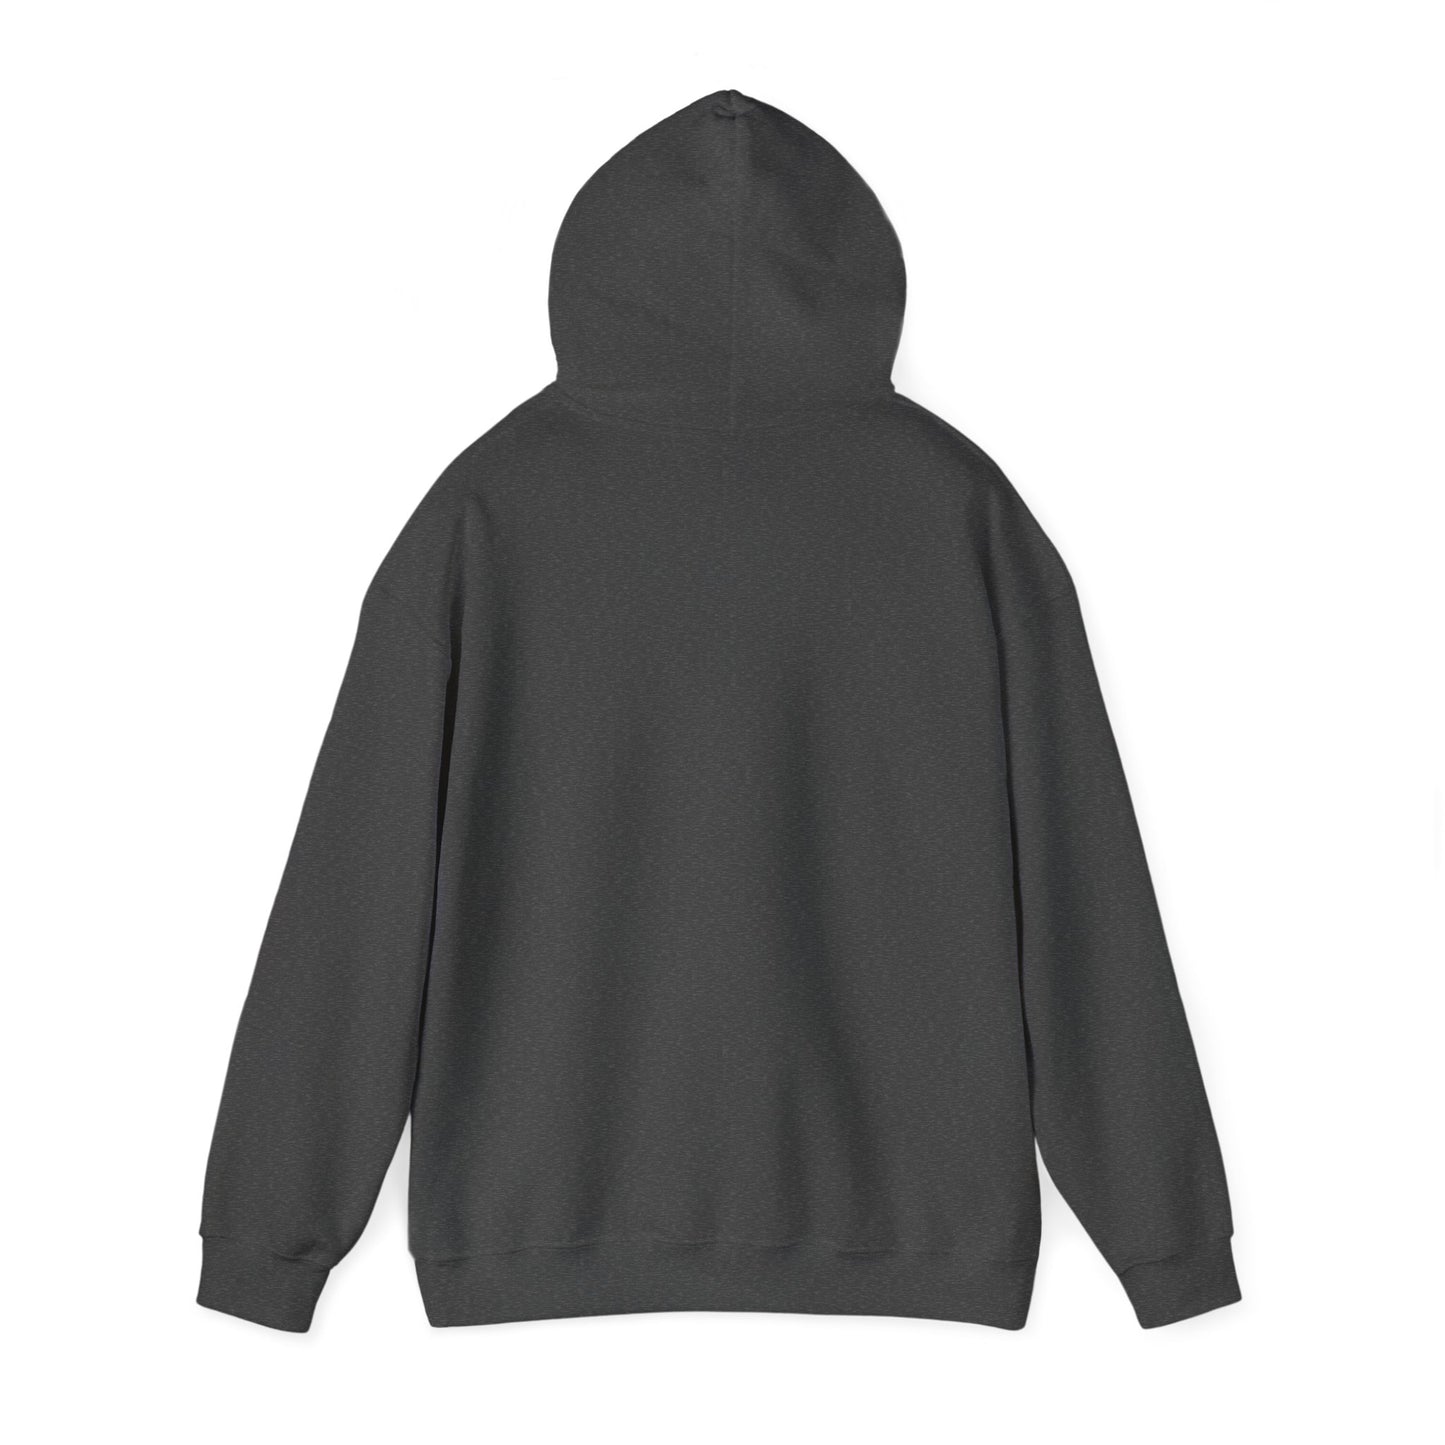 Explore The Outdoors. Unisex Hooded Sweatshirt.